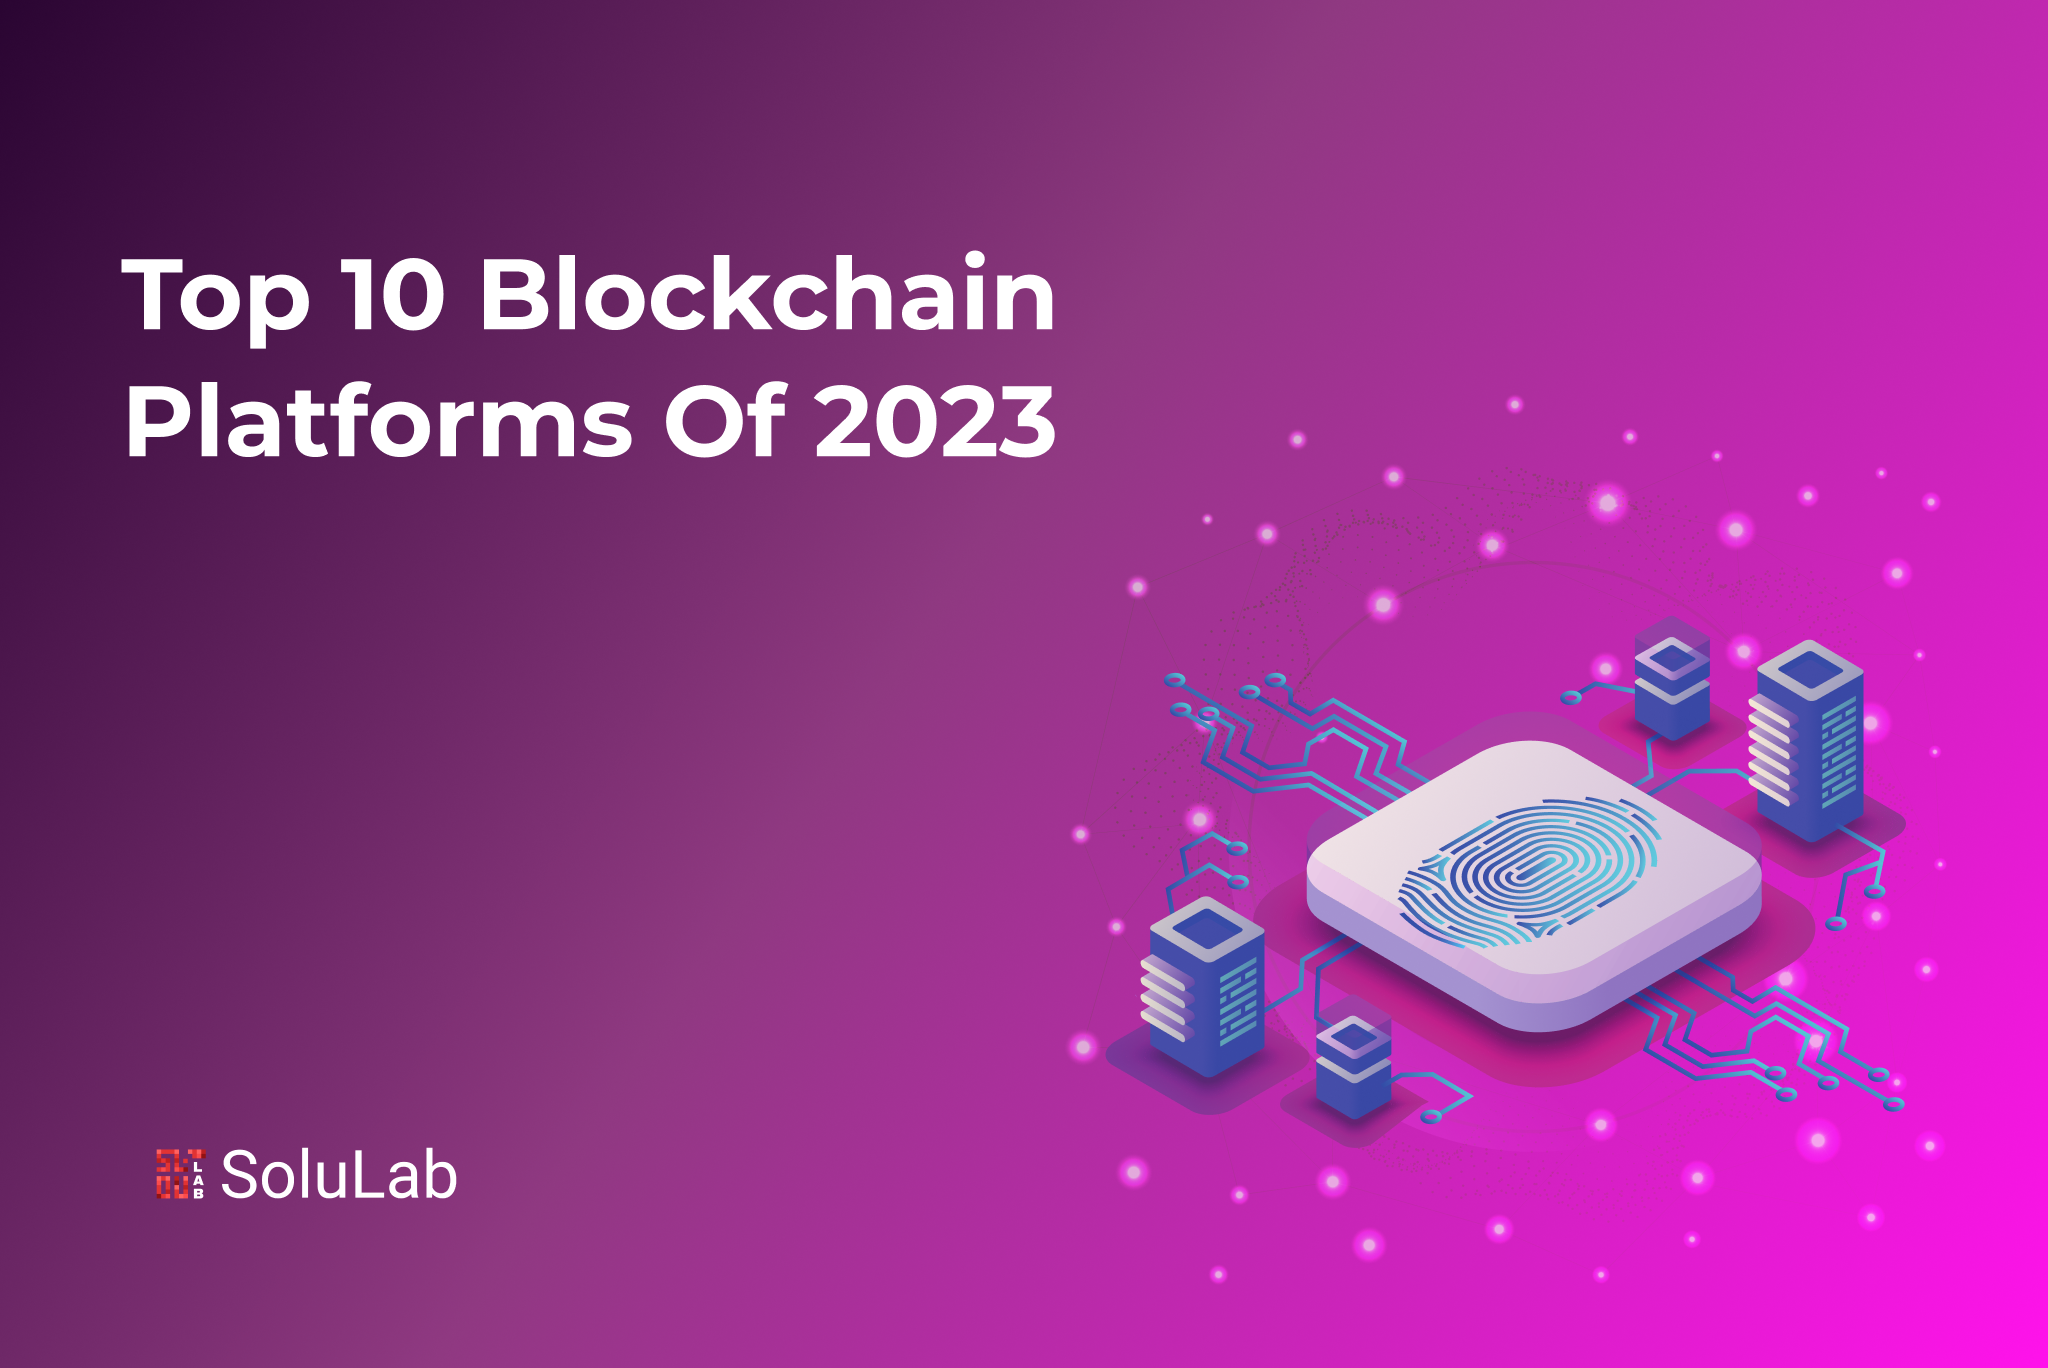 Top 10 Blockchain Platforms of 2023